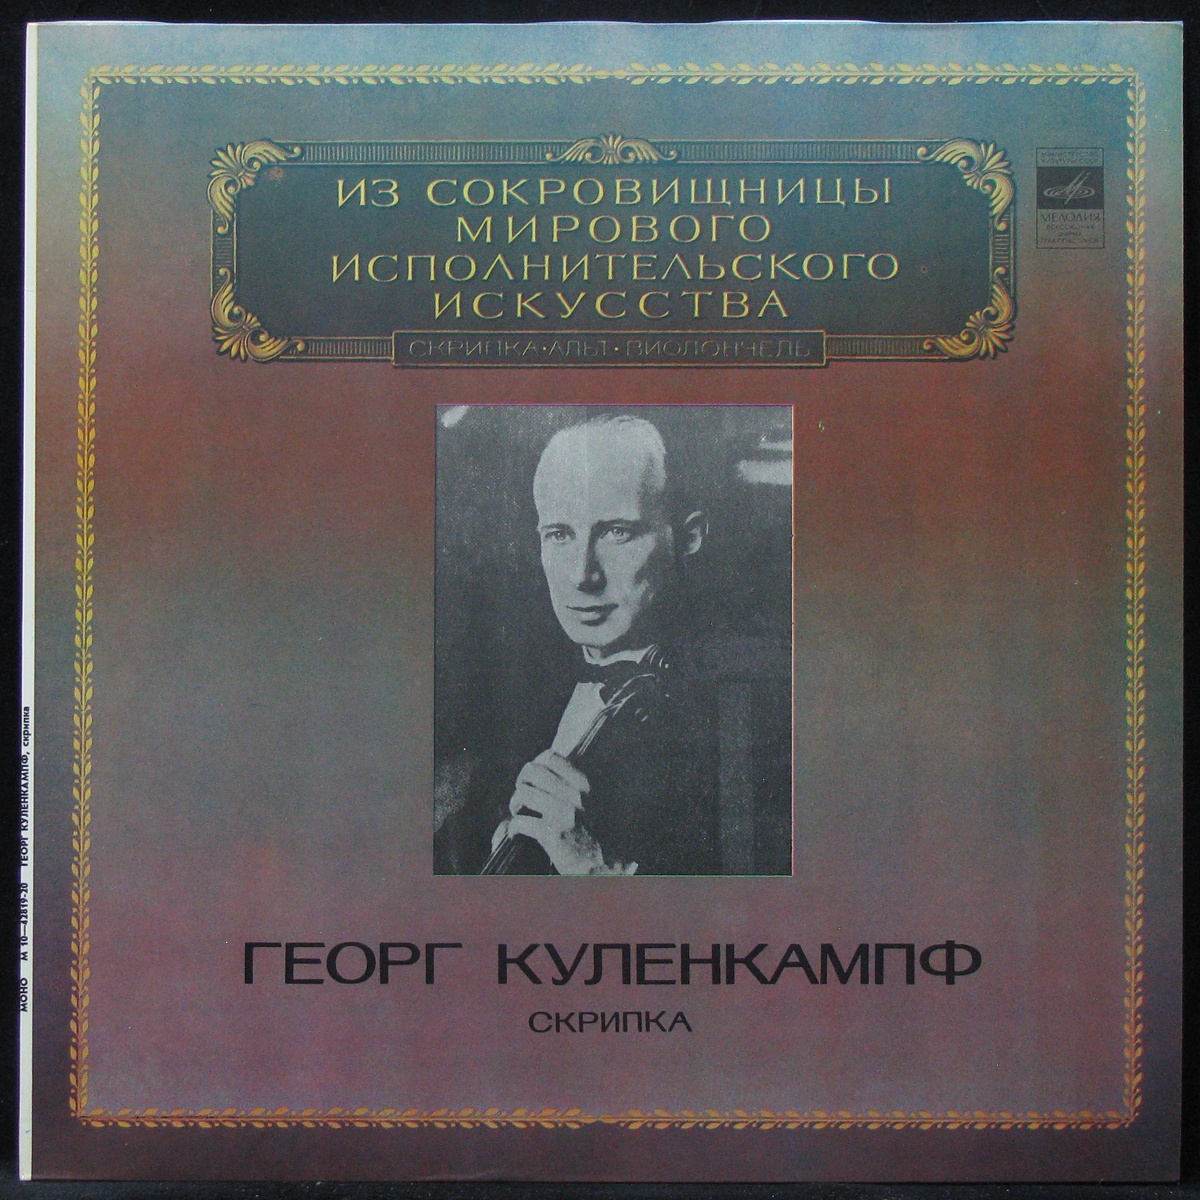 LP Georg Kulenkampff — Скрипка (mono) фото